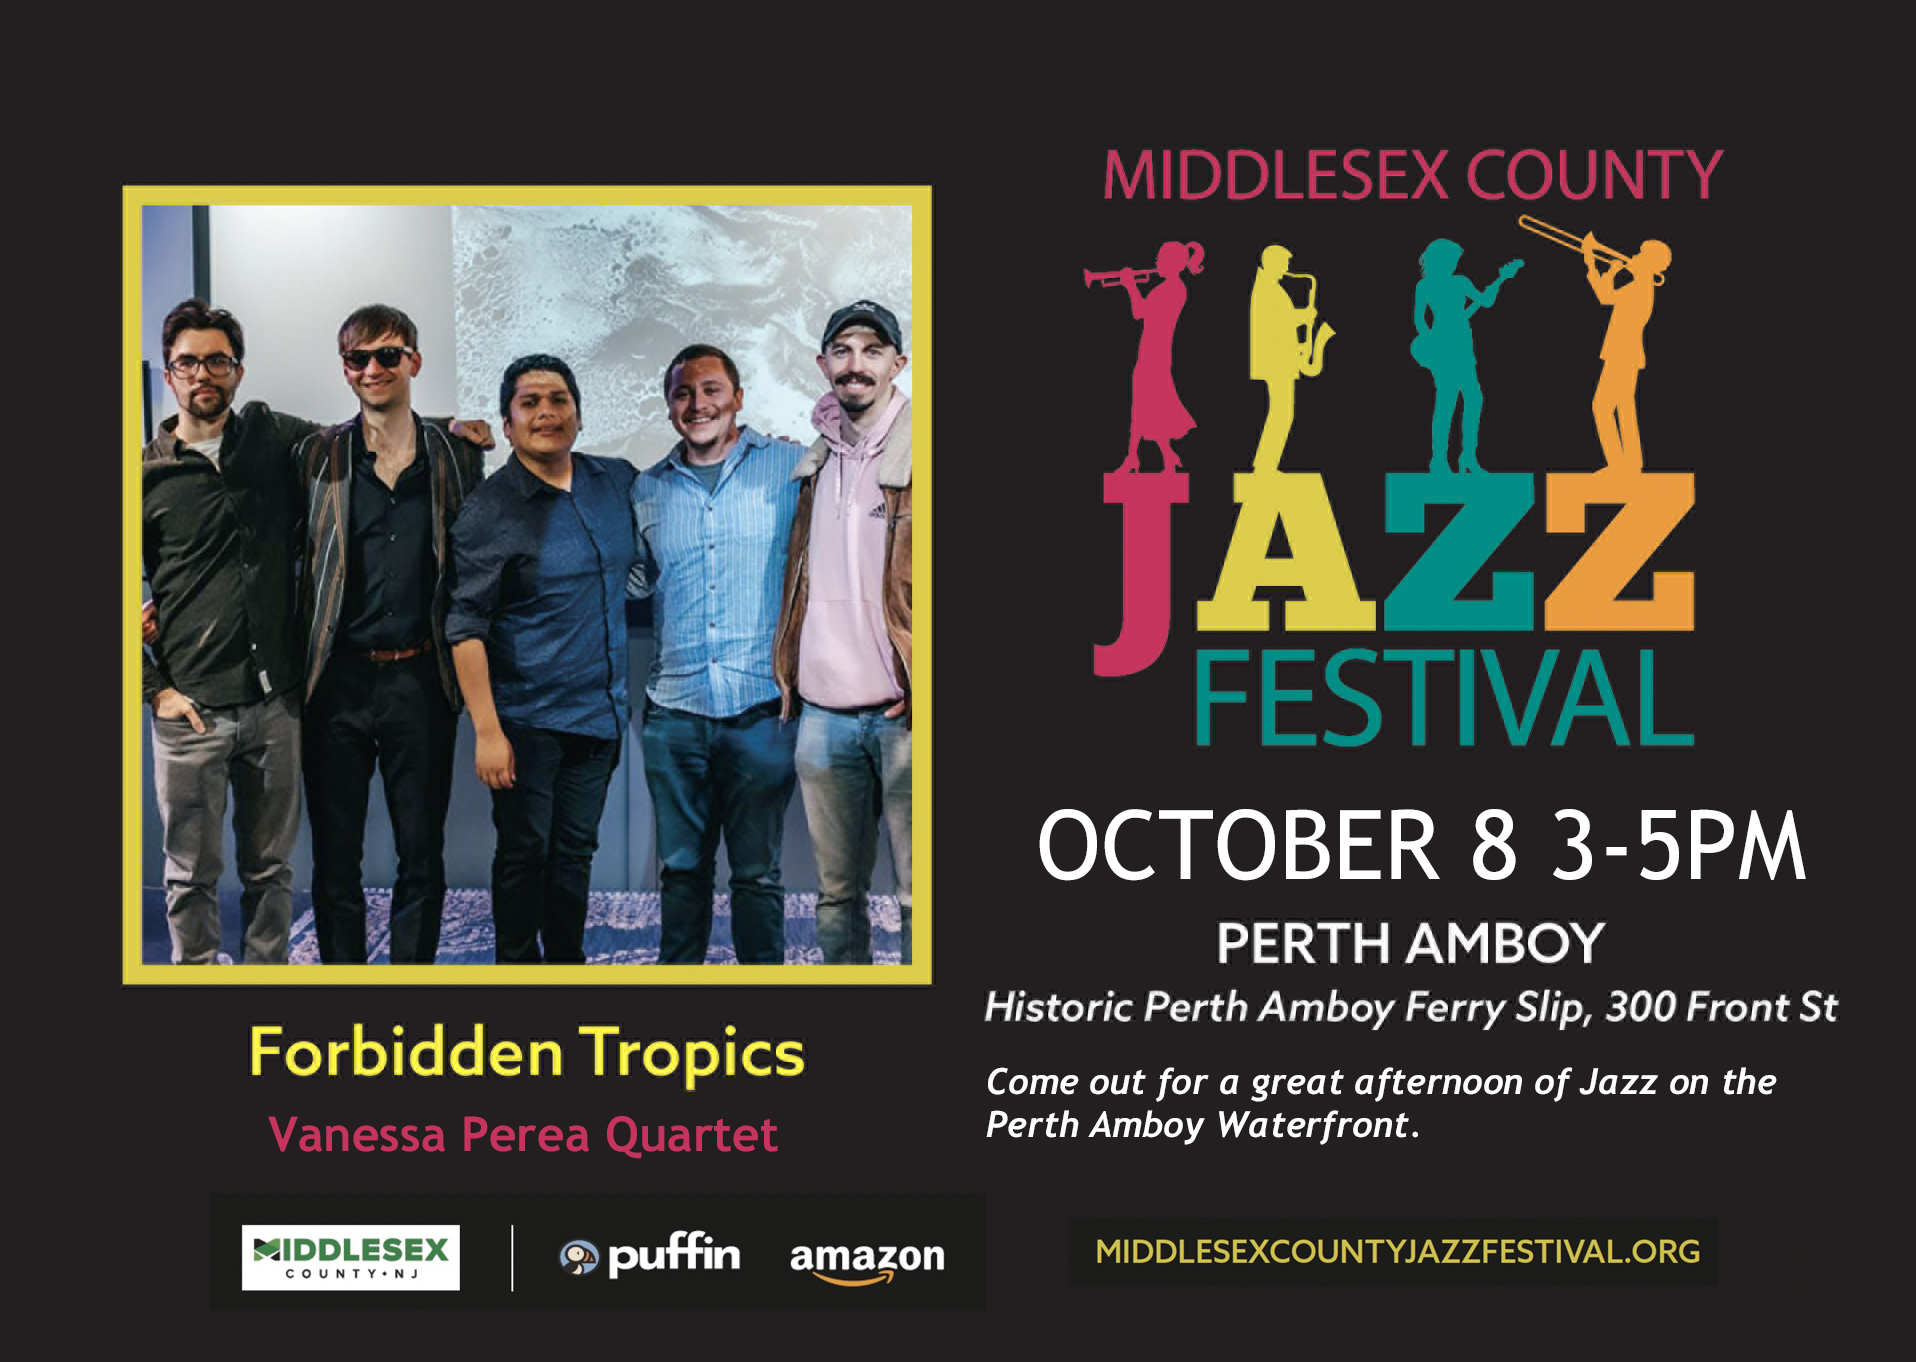 MIDDLESEX COUNTY JAZZ Festival perth Amboy